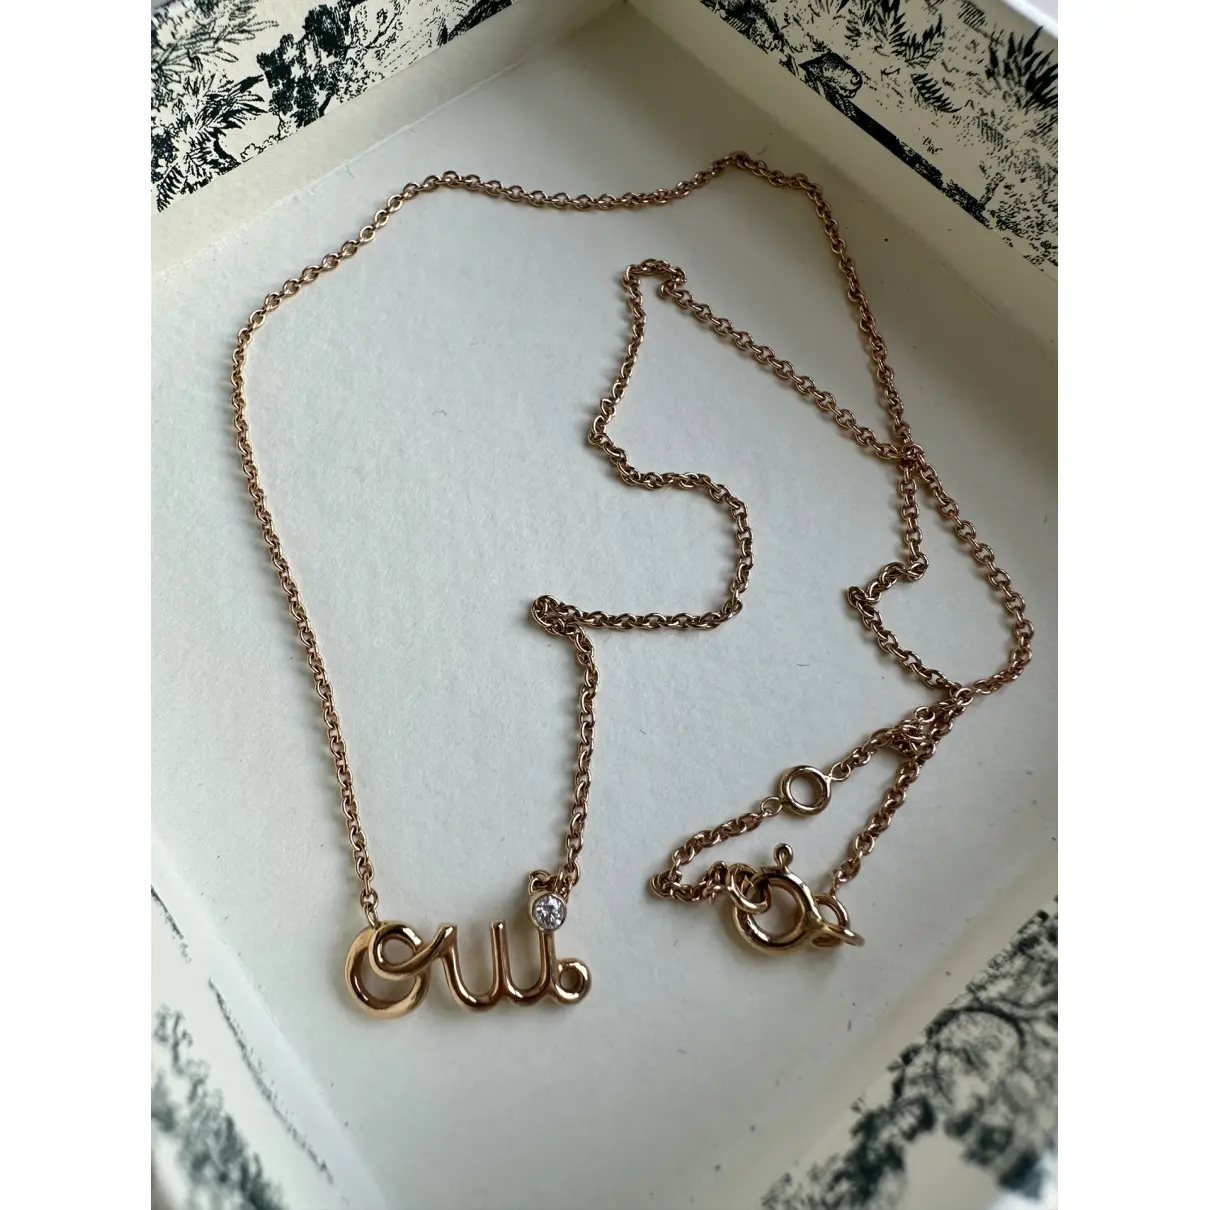 Buy Dior Oui pink gold necklace online